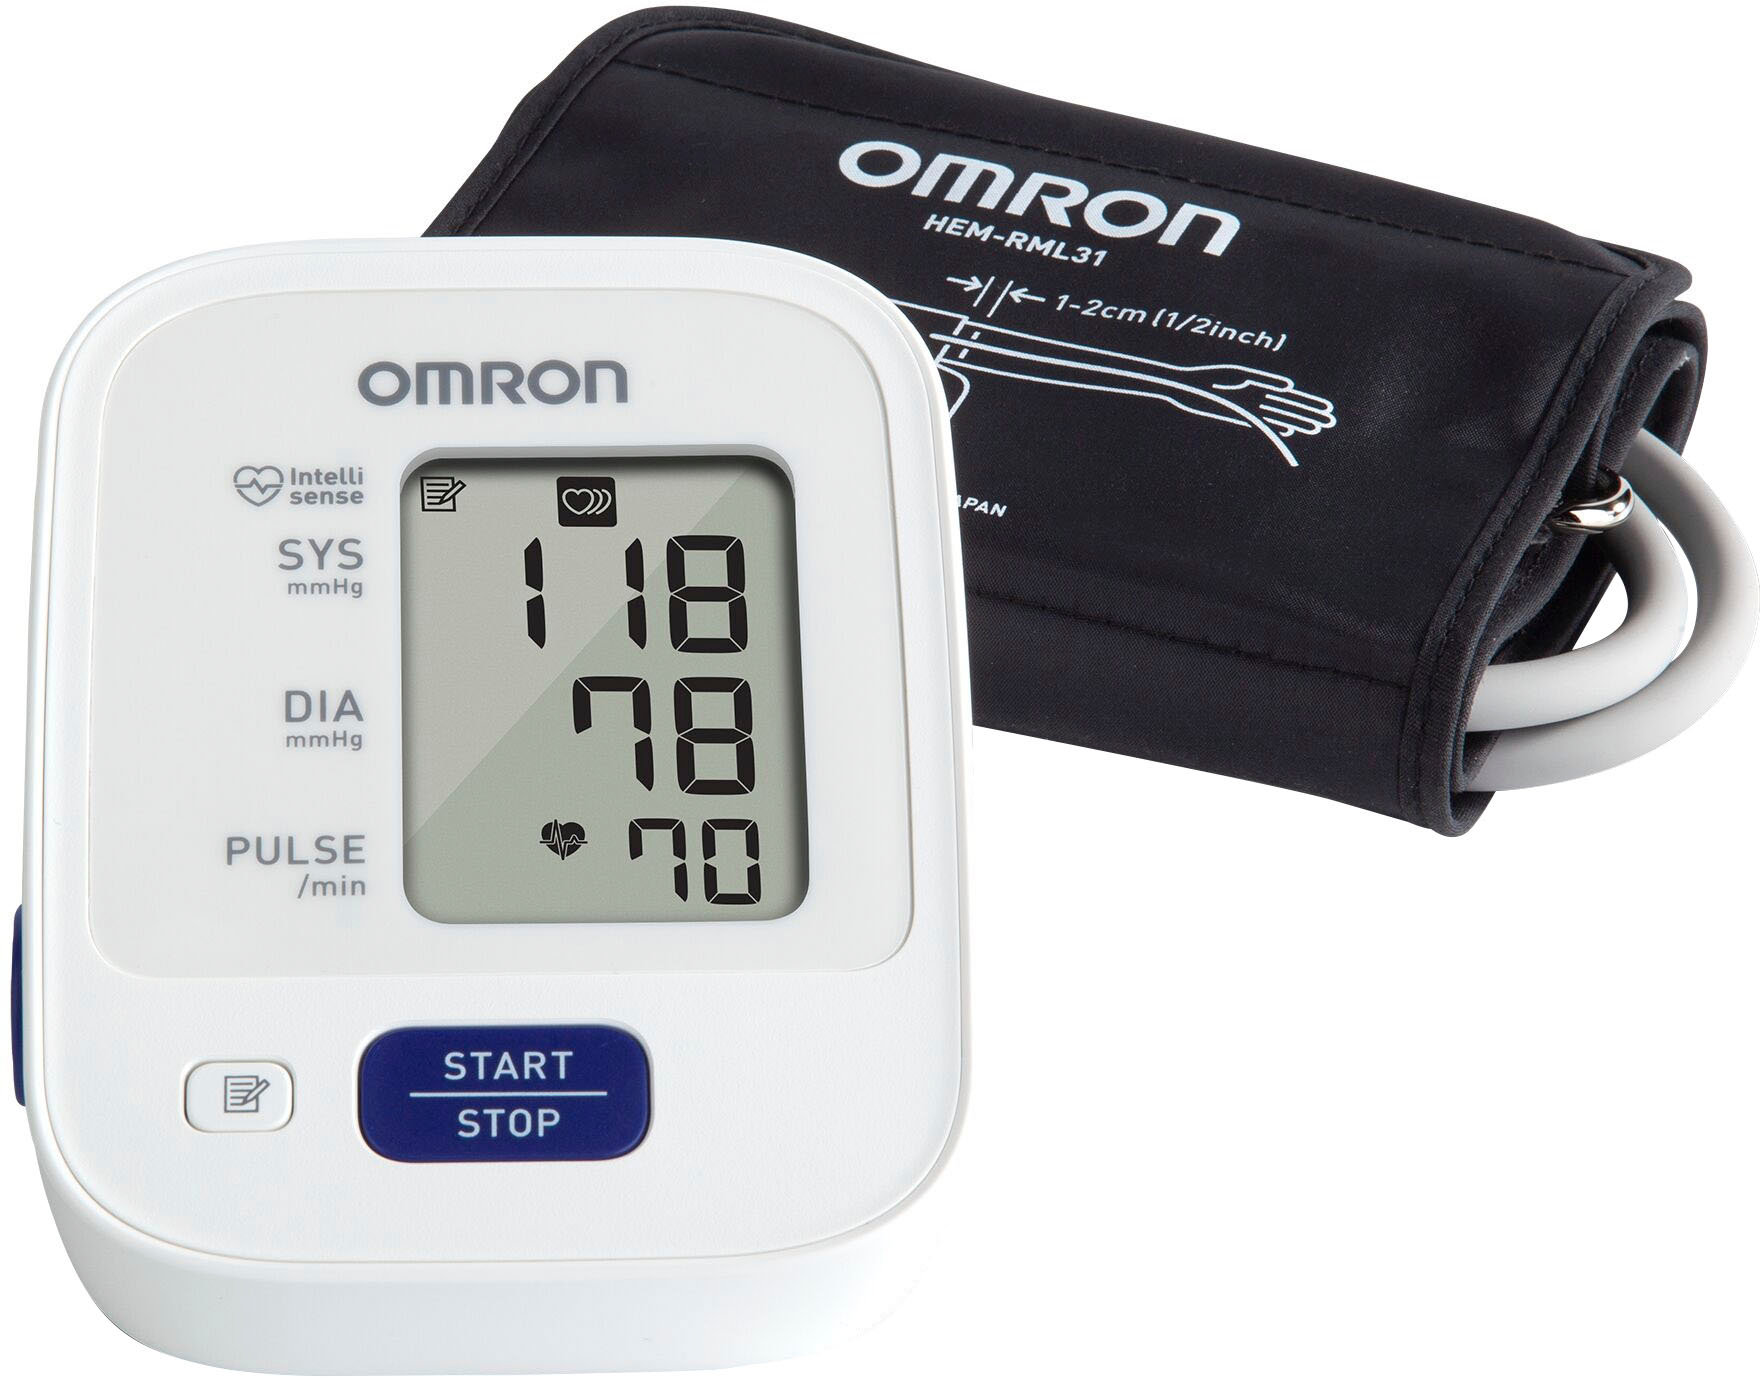 iHealth Track Bluetooth Upper Arm Blood Pressure Monitor